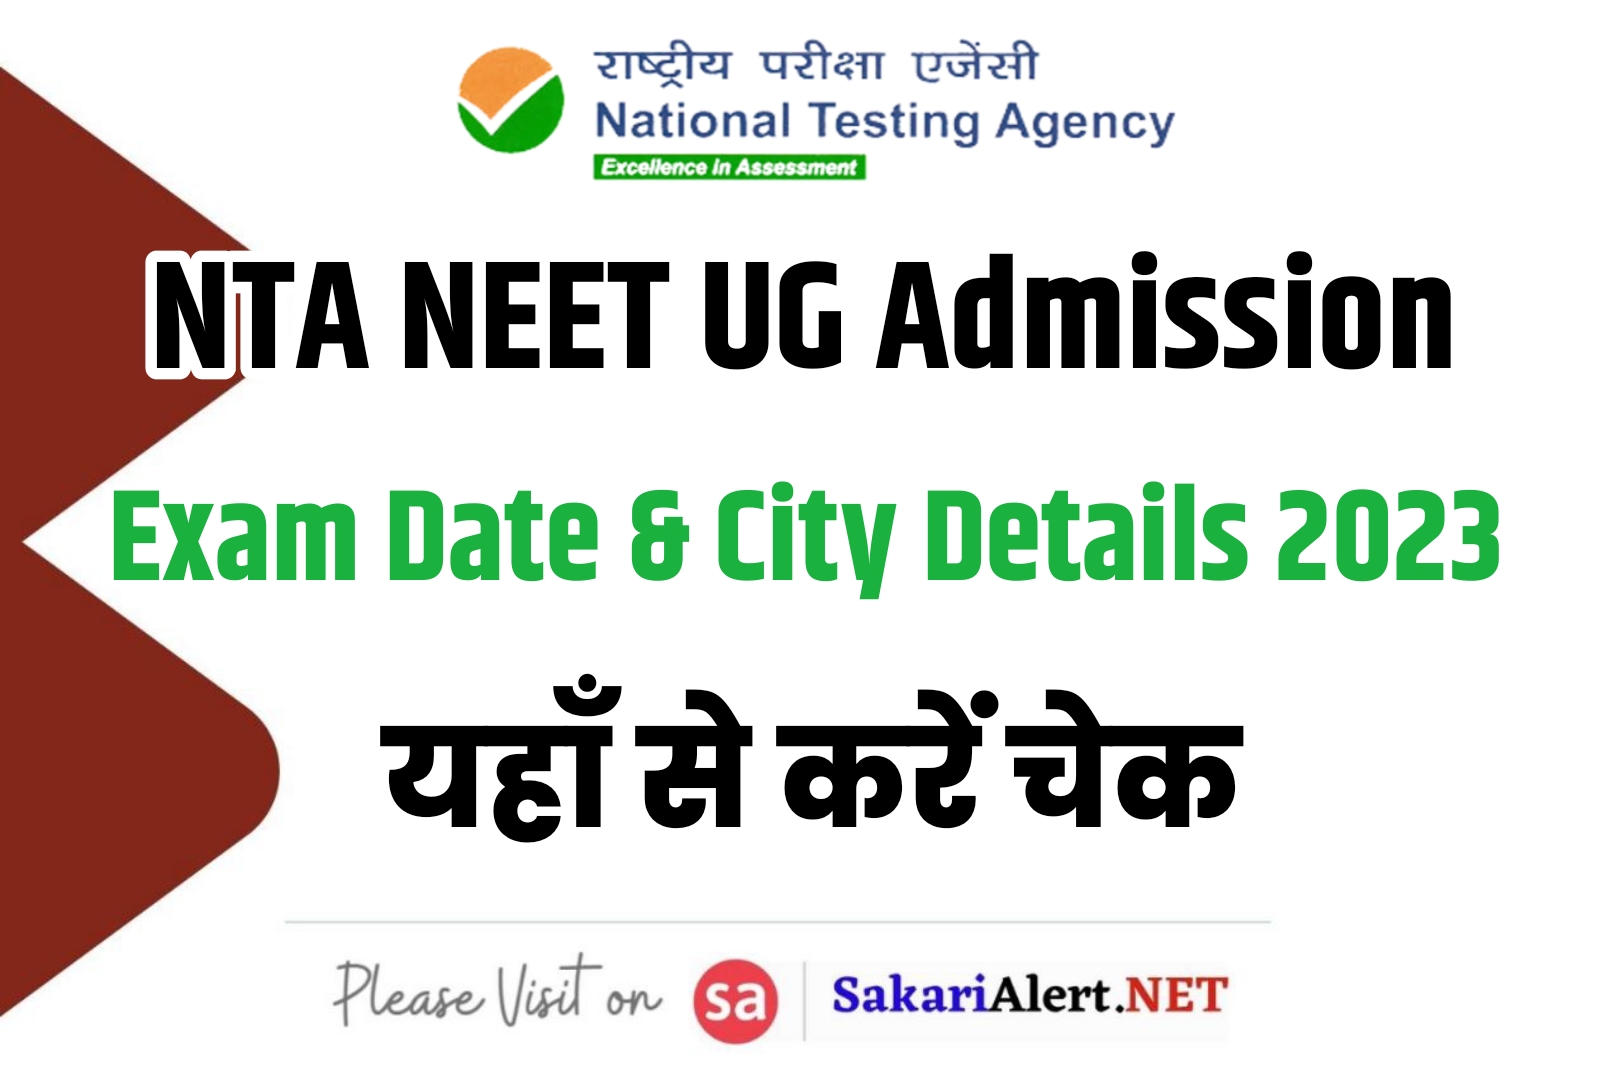 NTA NEET UG Admission Exam Date & City Details 2023